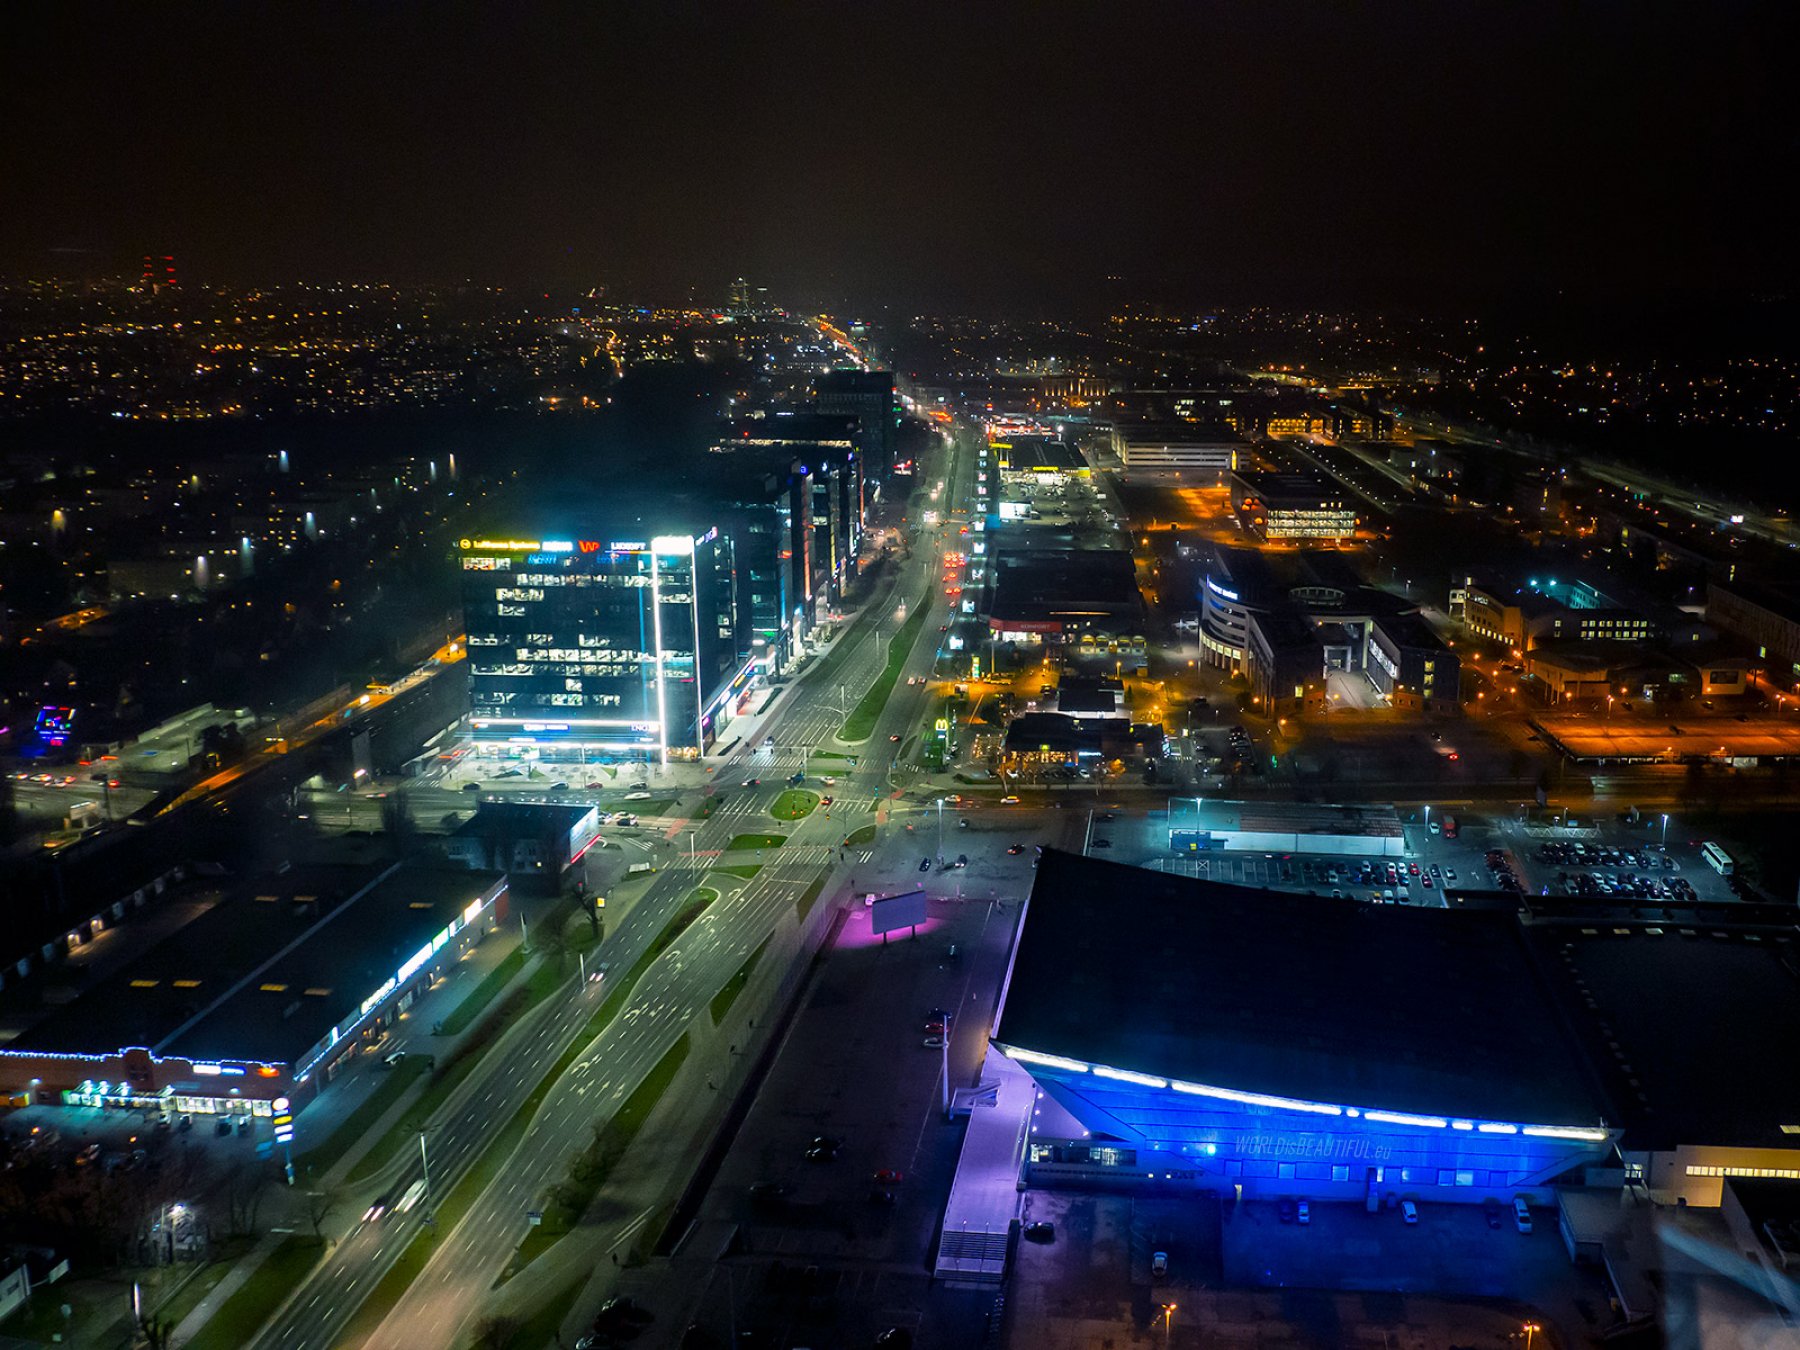 Zdjęcie Gdańska z Olivia Business Centre